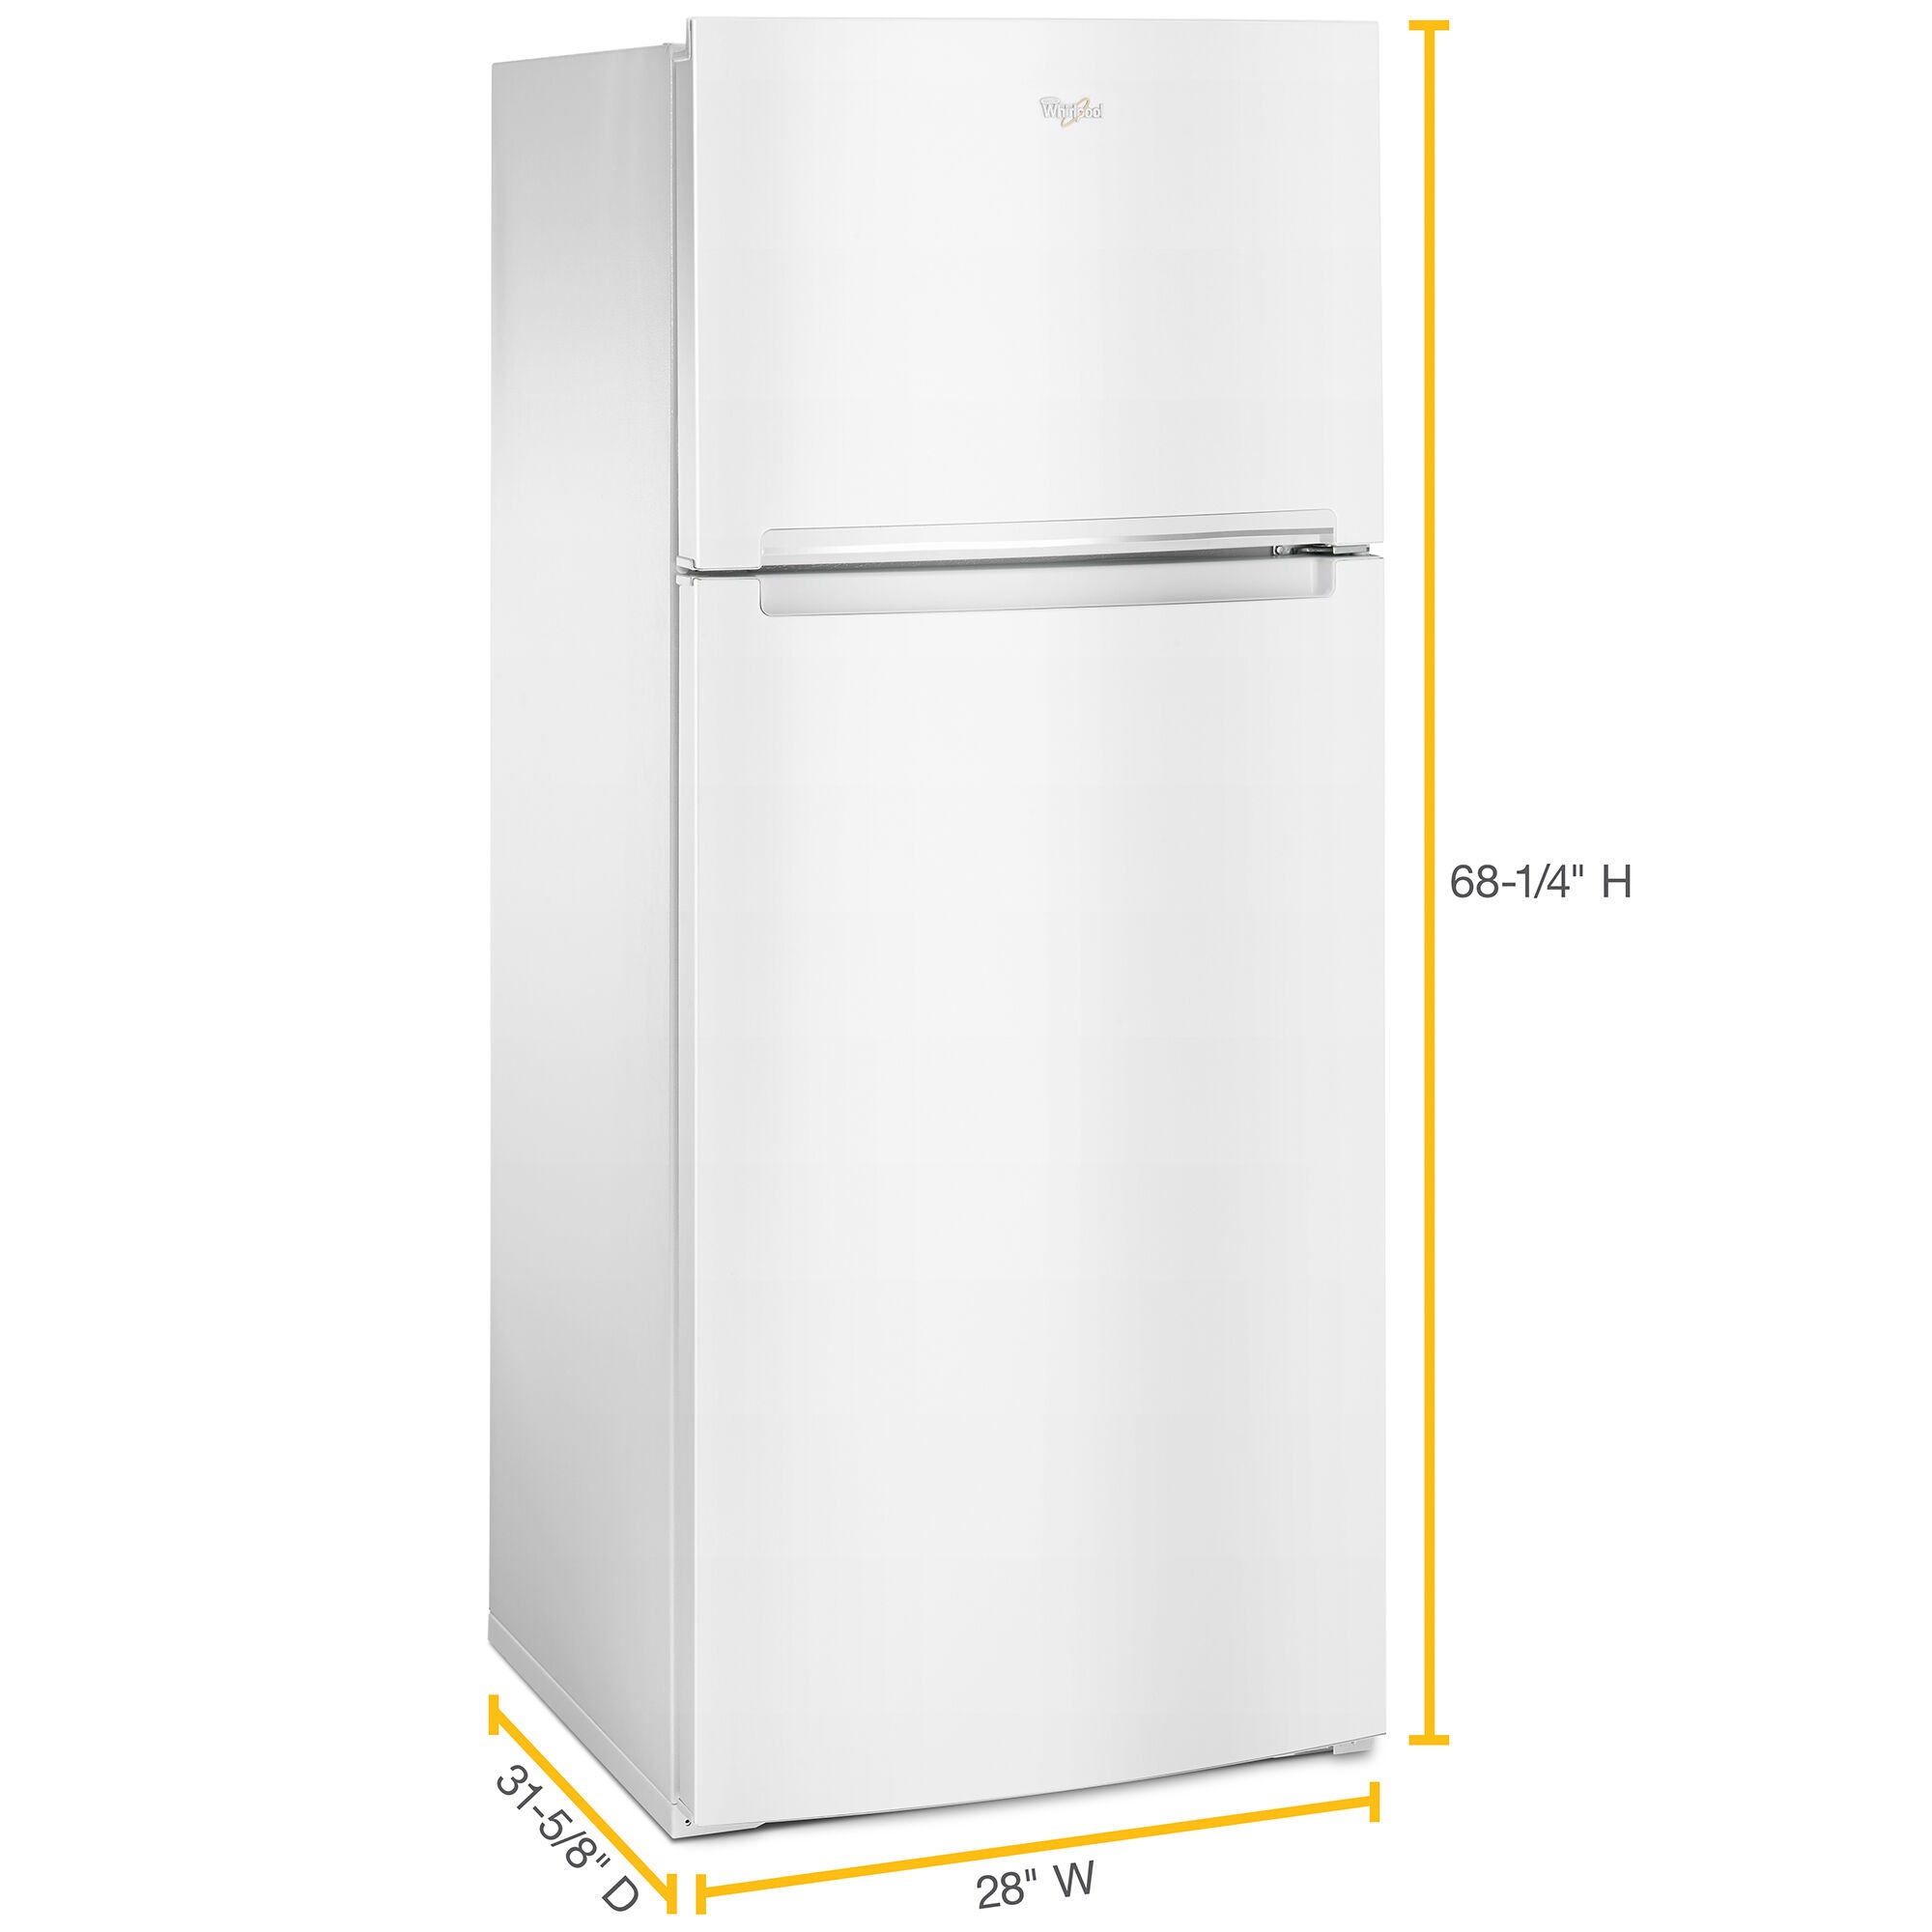 Whirlpool 28 in. 18.0 cu. ft. Top Freezer Refrigerator - White